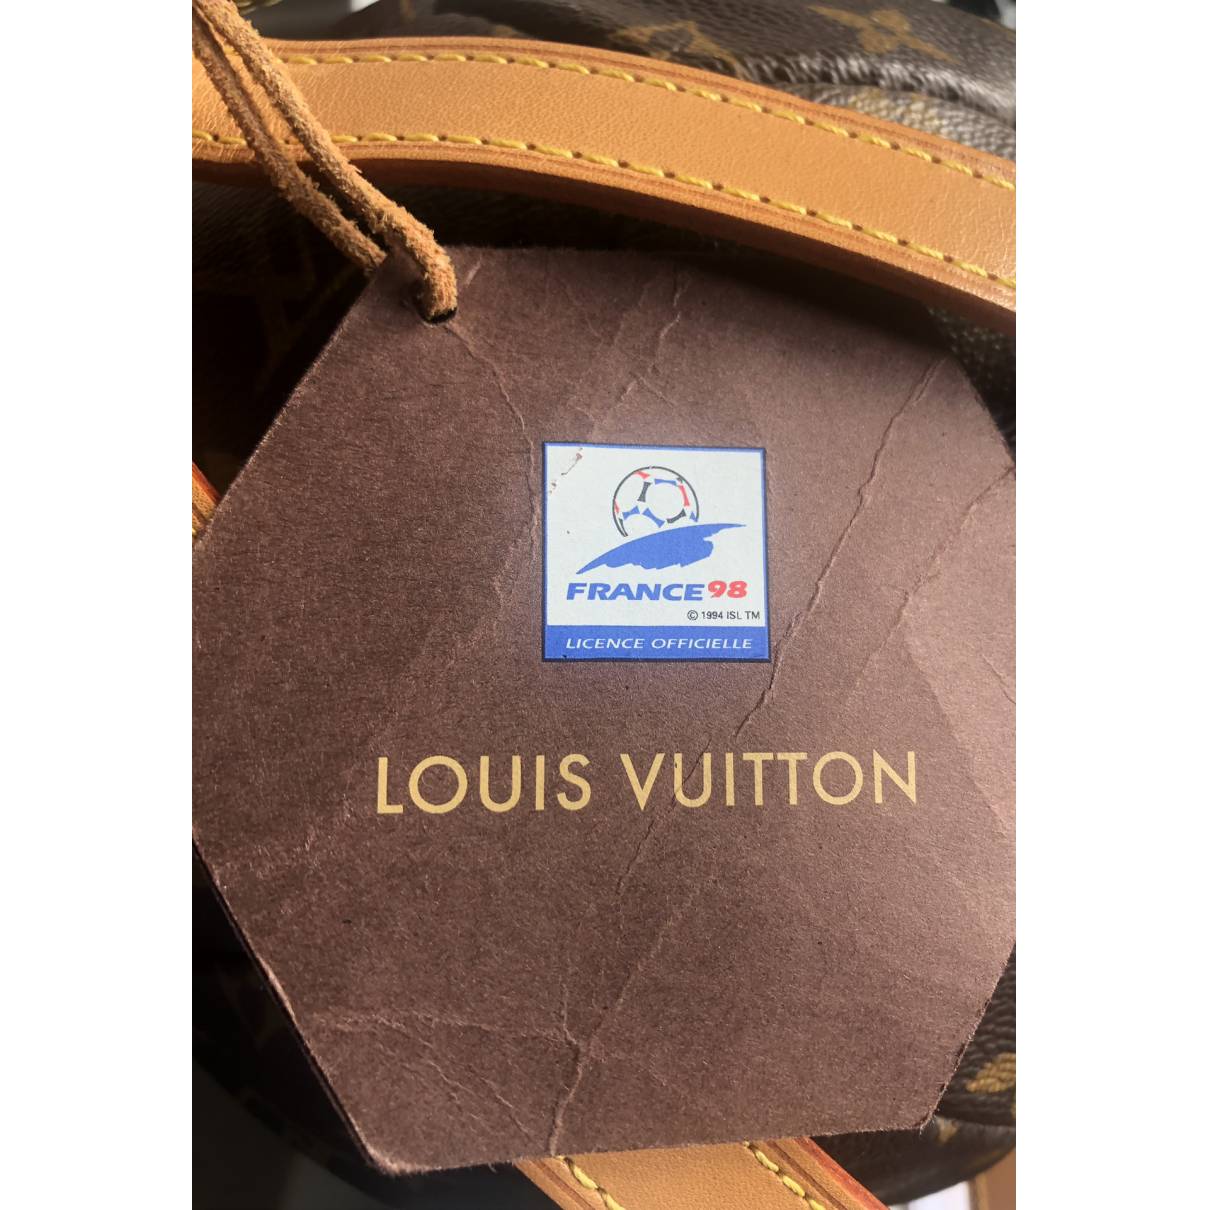 Authentic 1994 Edition Louis Vuitton Cup